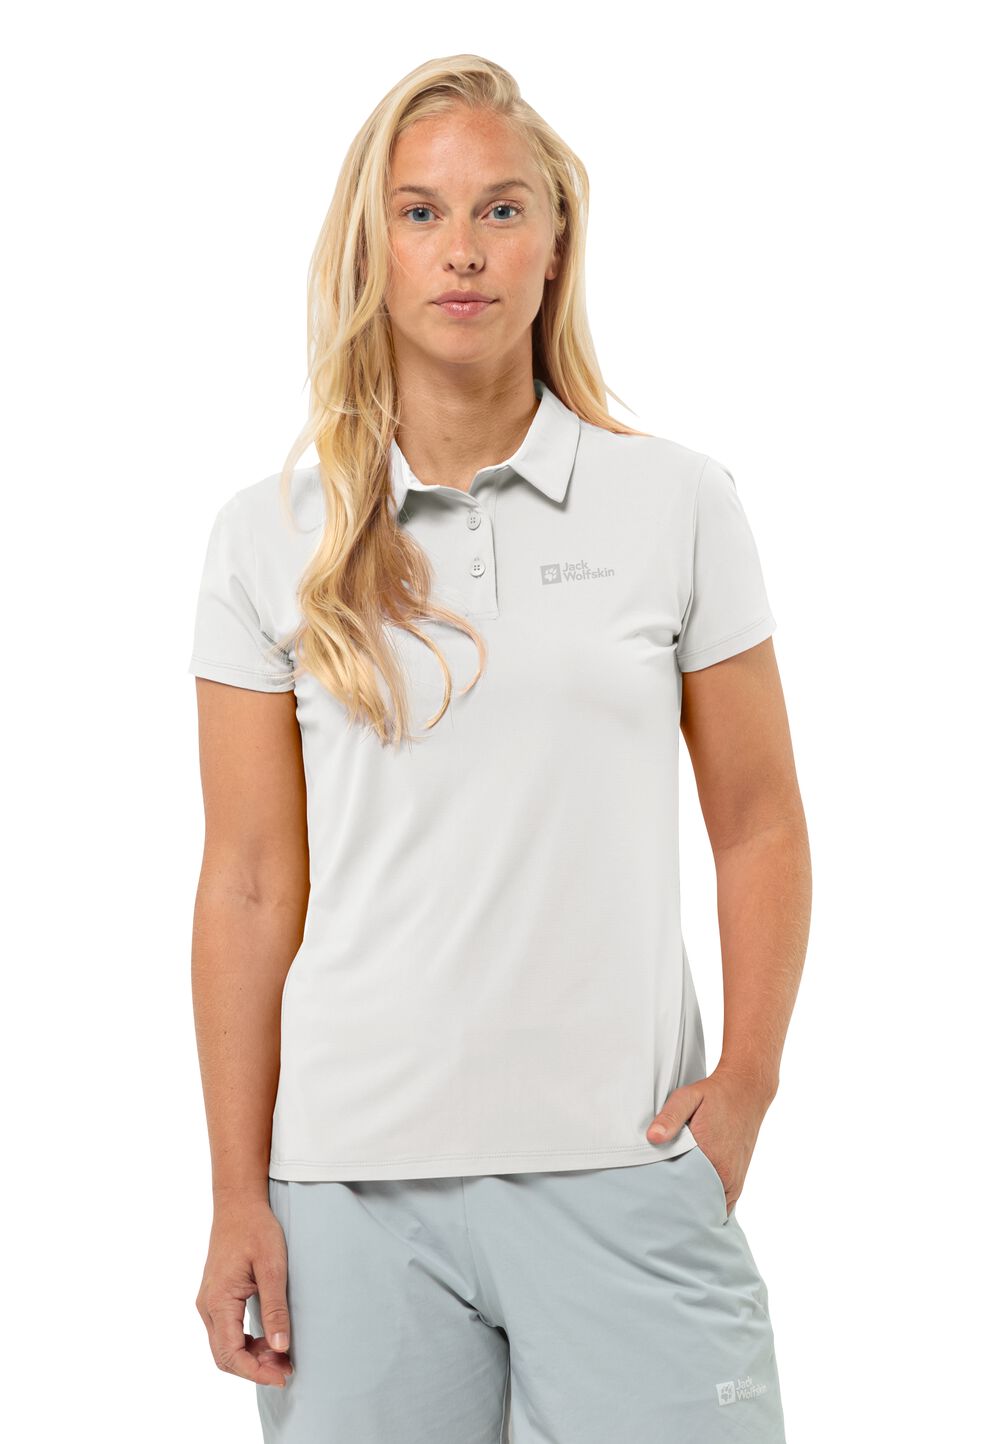 Jack Wolfskin Prelight Trail Polo Women Functioneel shirt Dames XL wit stark white